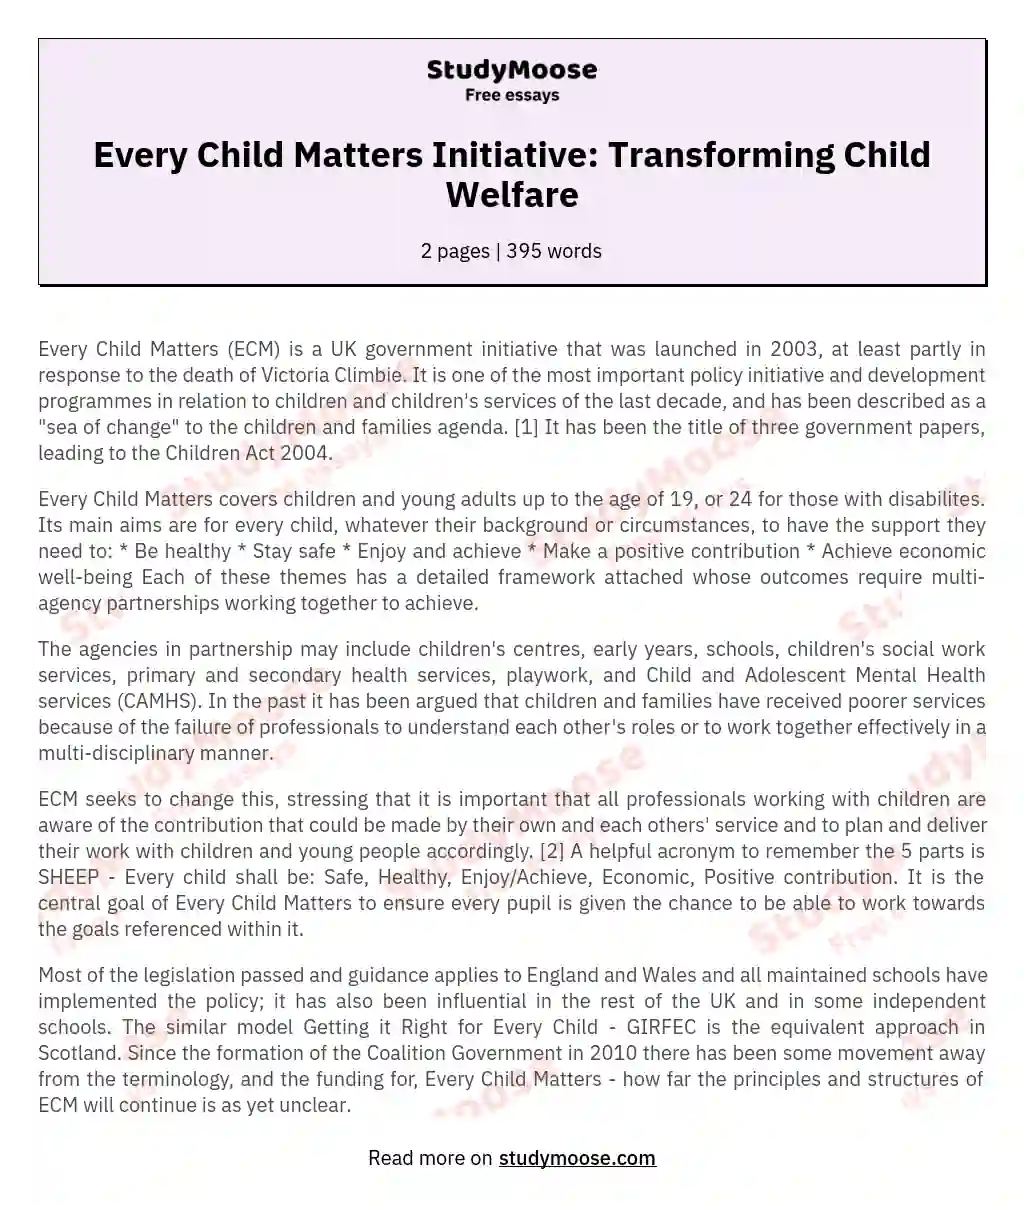 Every Child Matters Initiative: Transforming Child Welfare essay